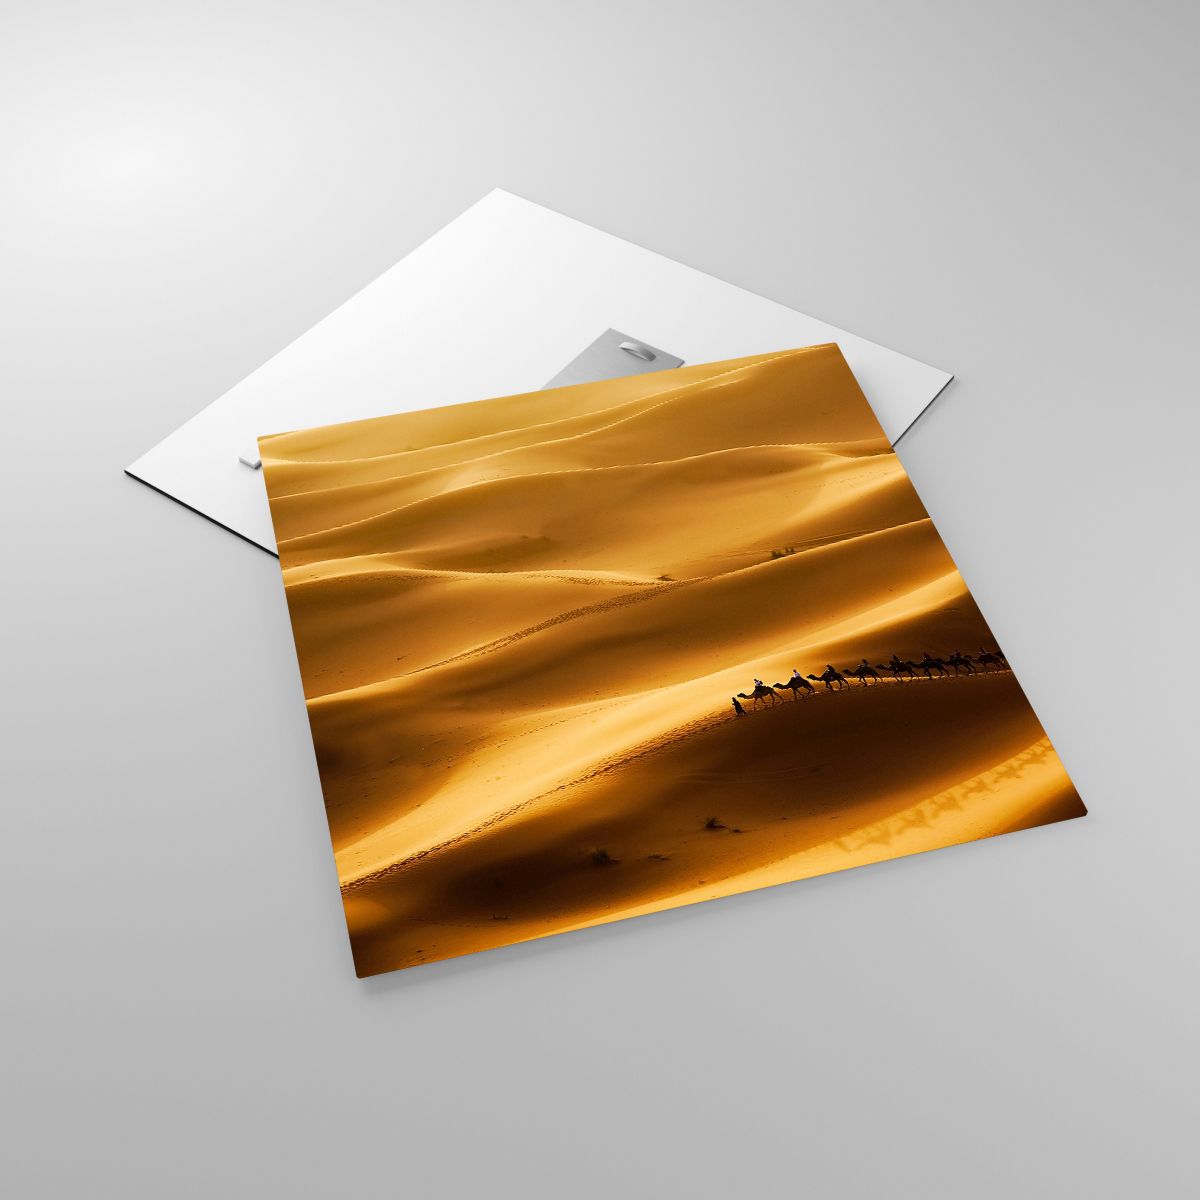 Glasbild Landschaft, Glasbild Afrika, Glasbild Wüste, Glasbild Sahara, Glasbild Kamele